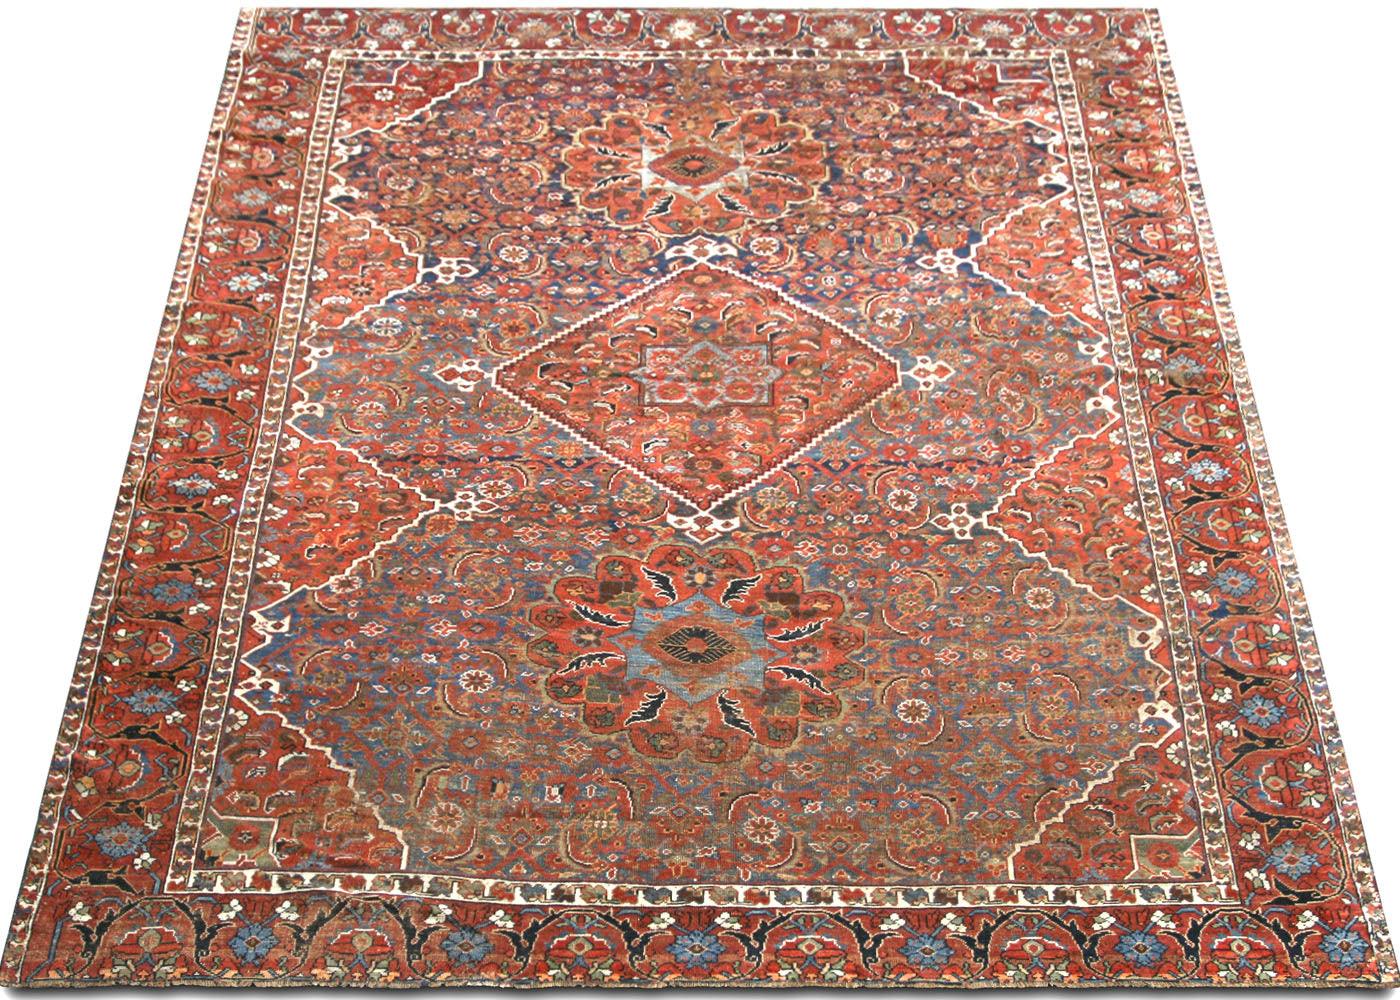 Antique Persian Shiraz Rug - 7'0" x 9'5"